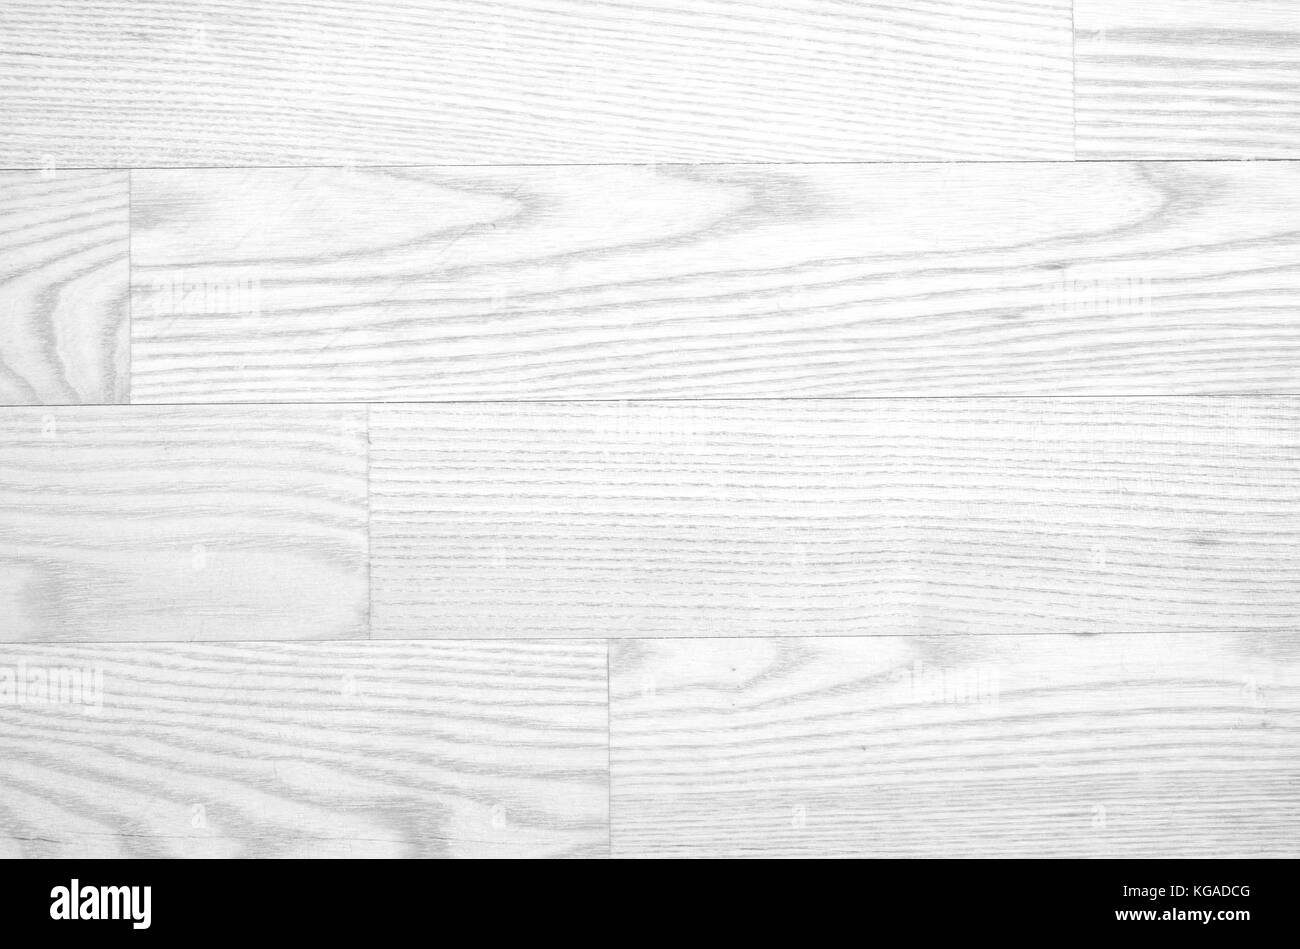 White wooden parquet, floor surface. Light wood texture. Stock Photo